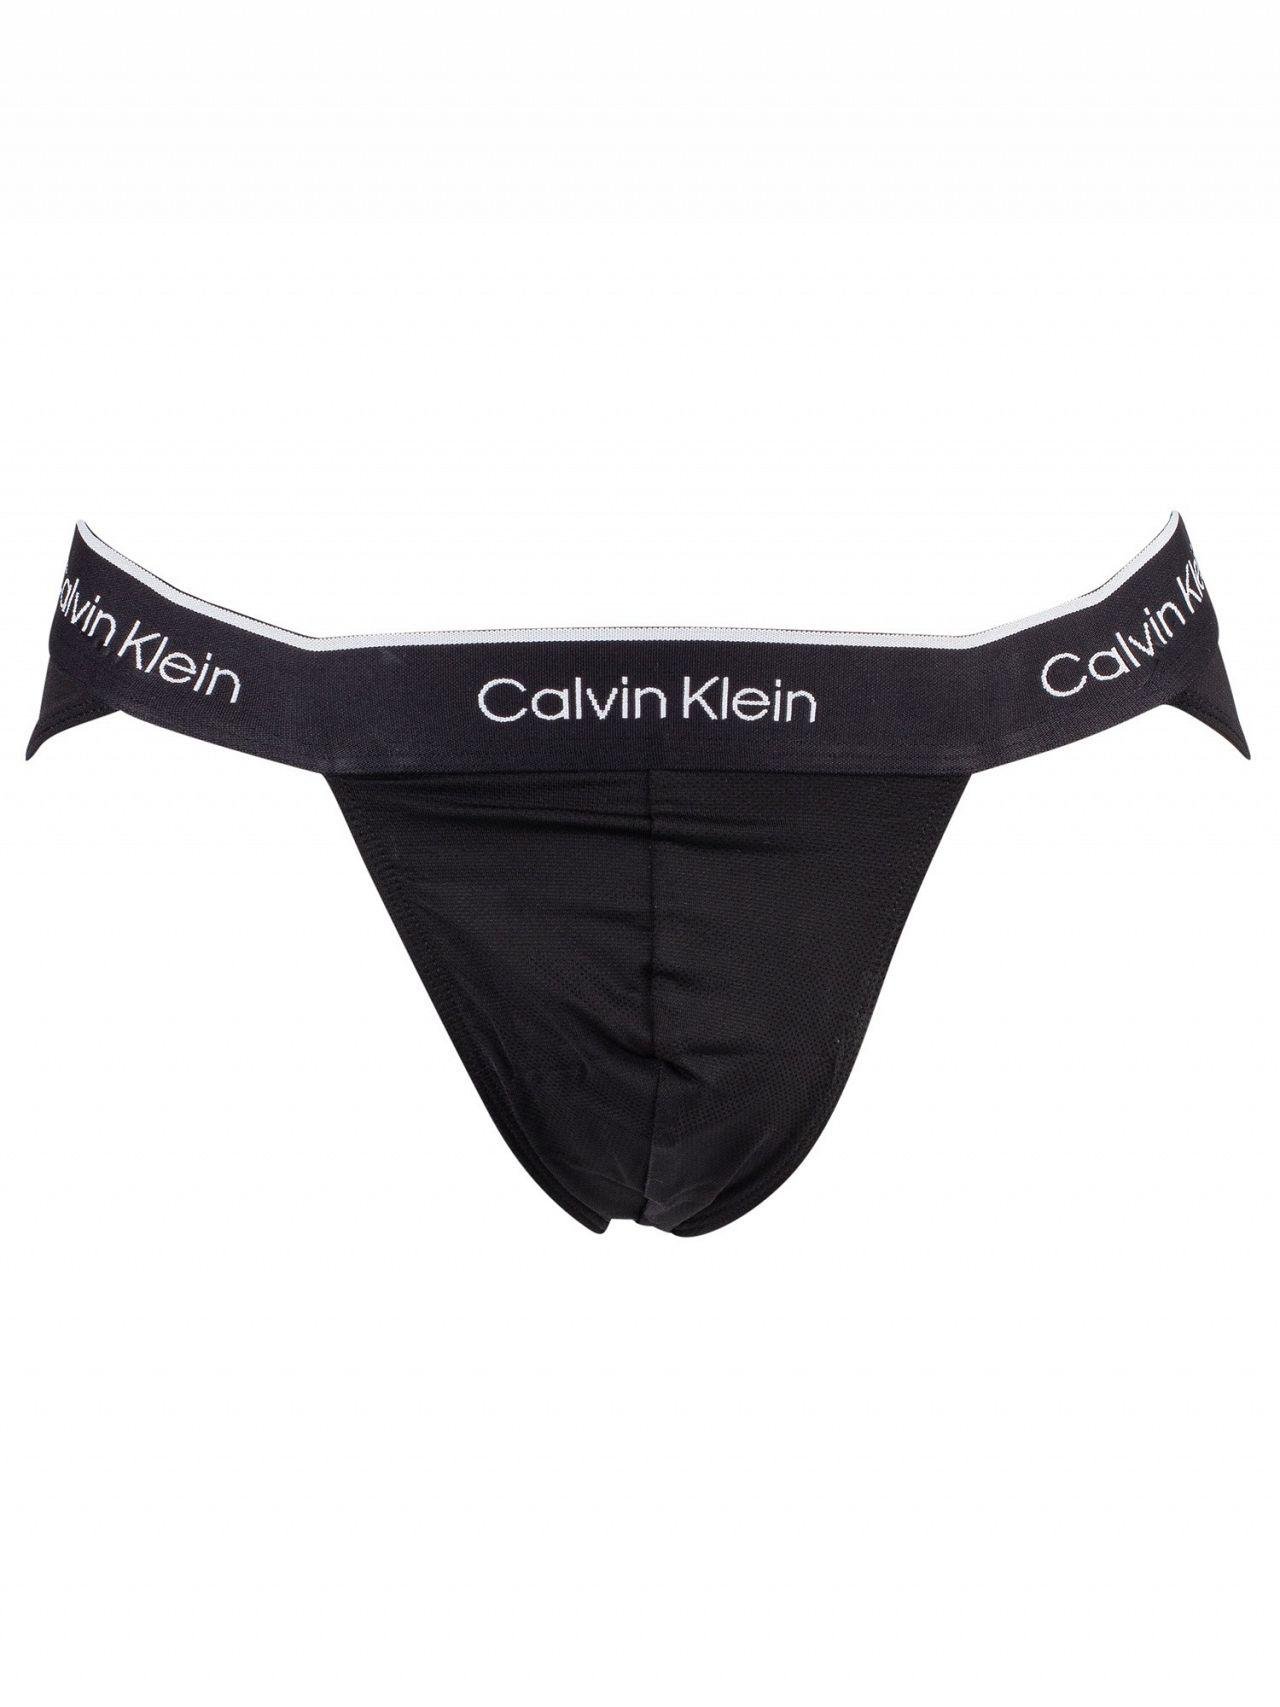 Calvin Klein Black 2 Pack Pro Air Sport Briefs for Men